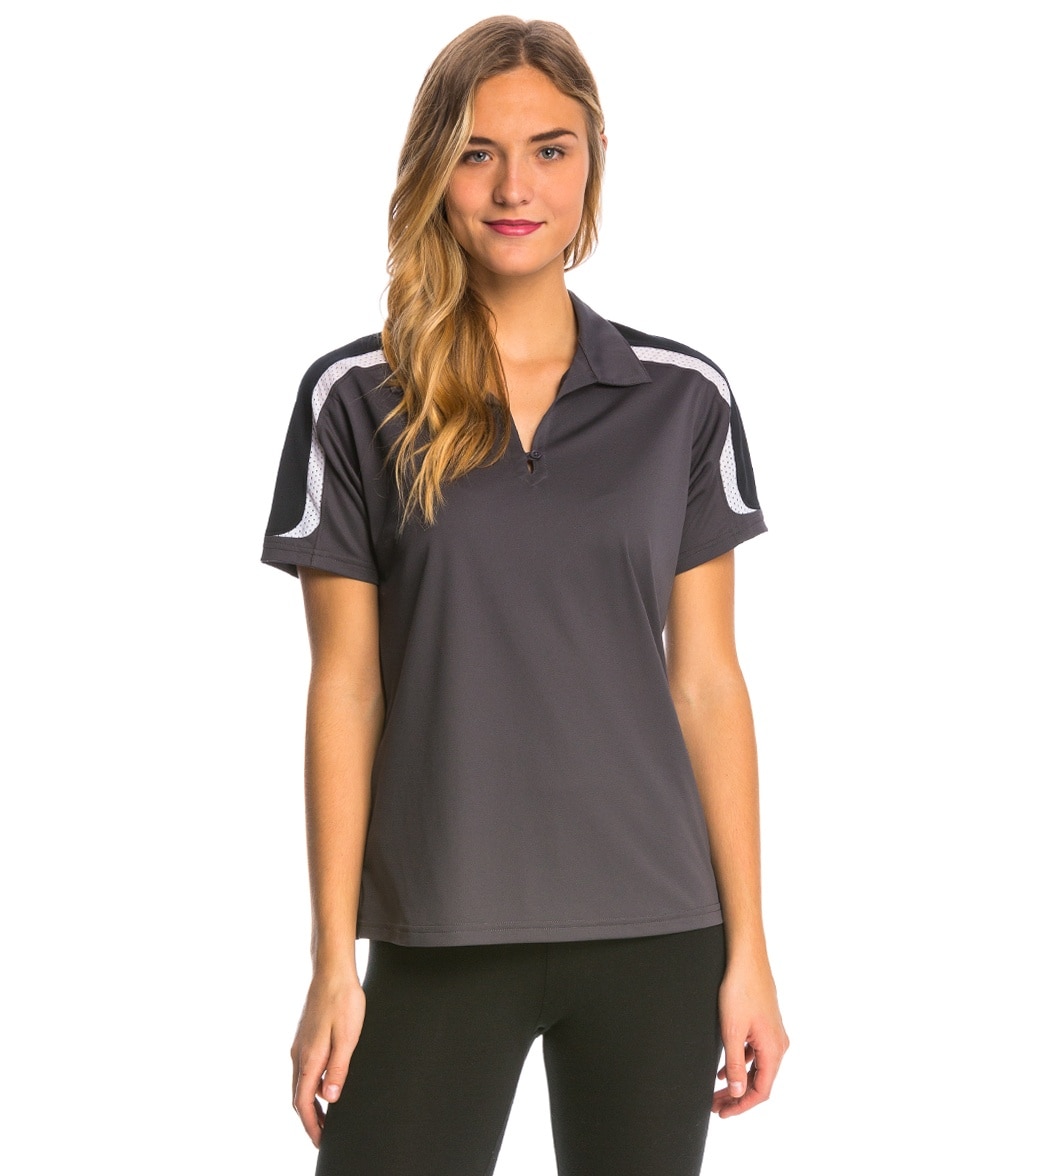 Women's Tech Polo - Iron Grey/Black/White 2Xl Polyester - Swimoutlet.com